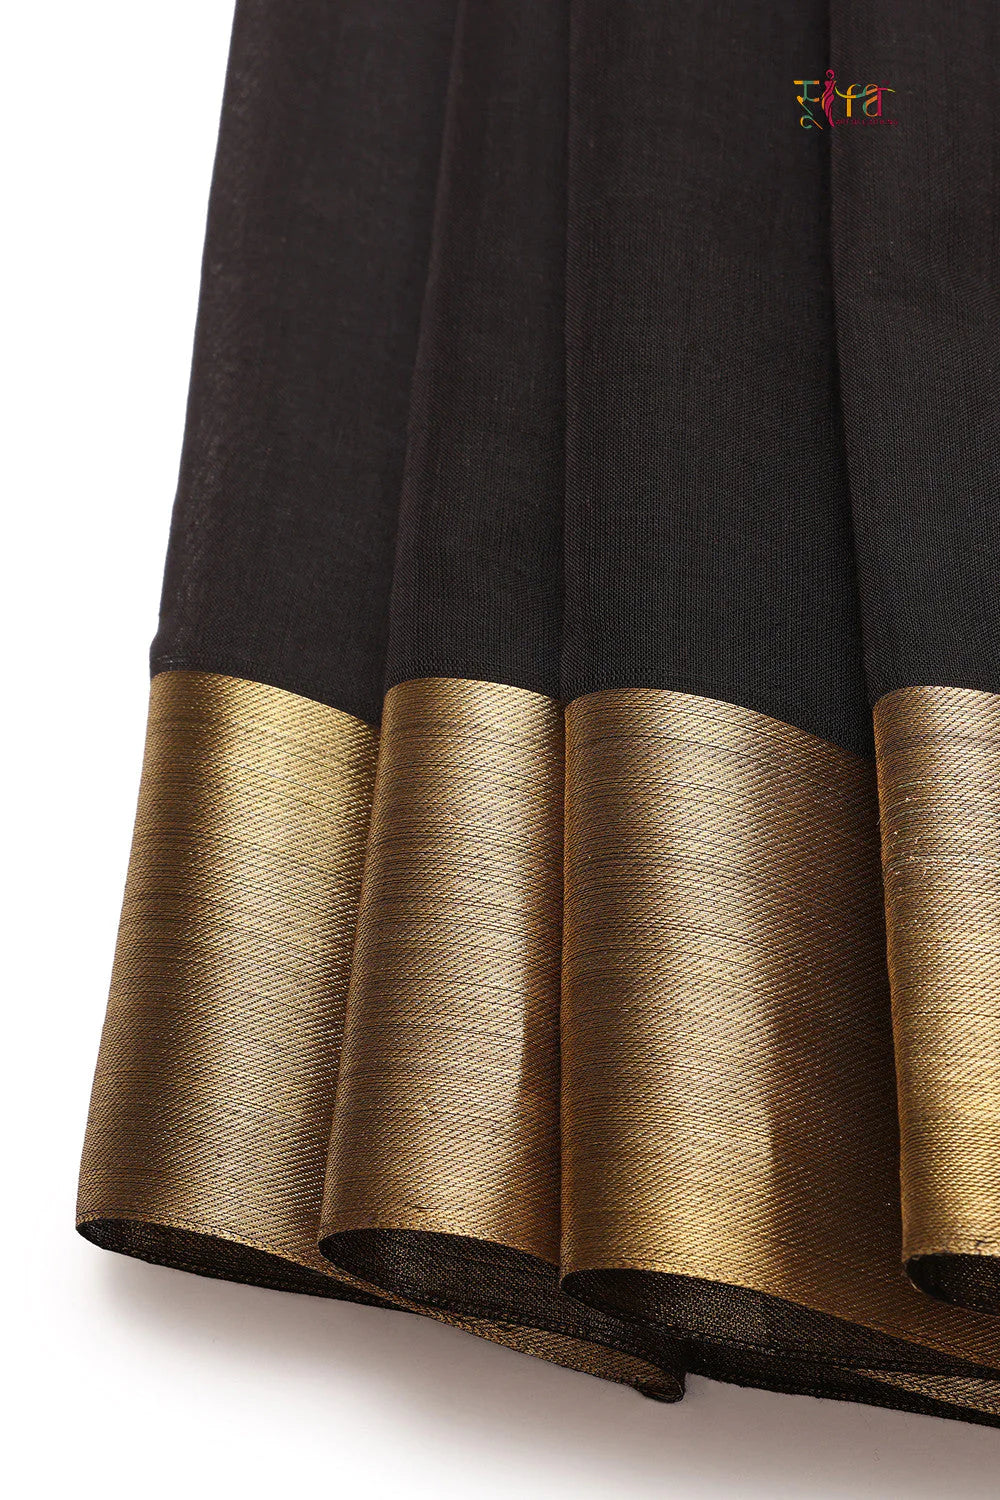 Handloom Ink Black Pure Cotton Kanchi Contemporary Saree with Golden Zari Motifs & Border